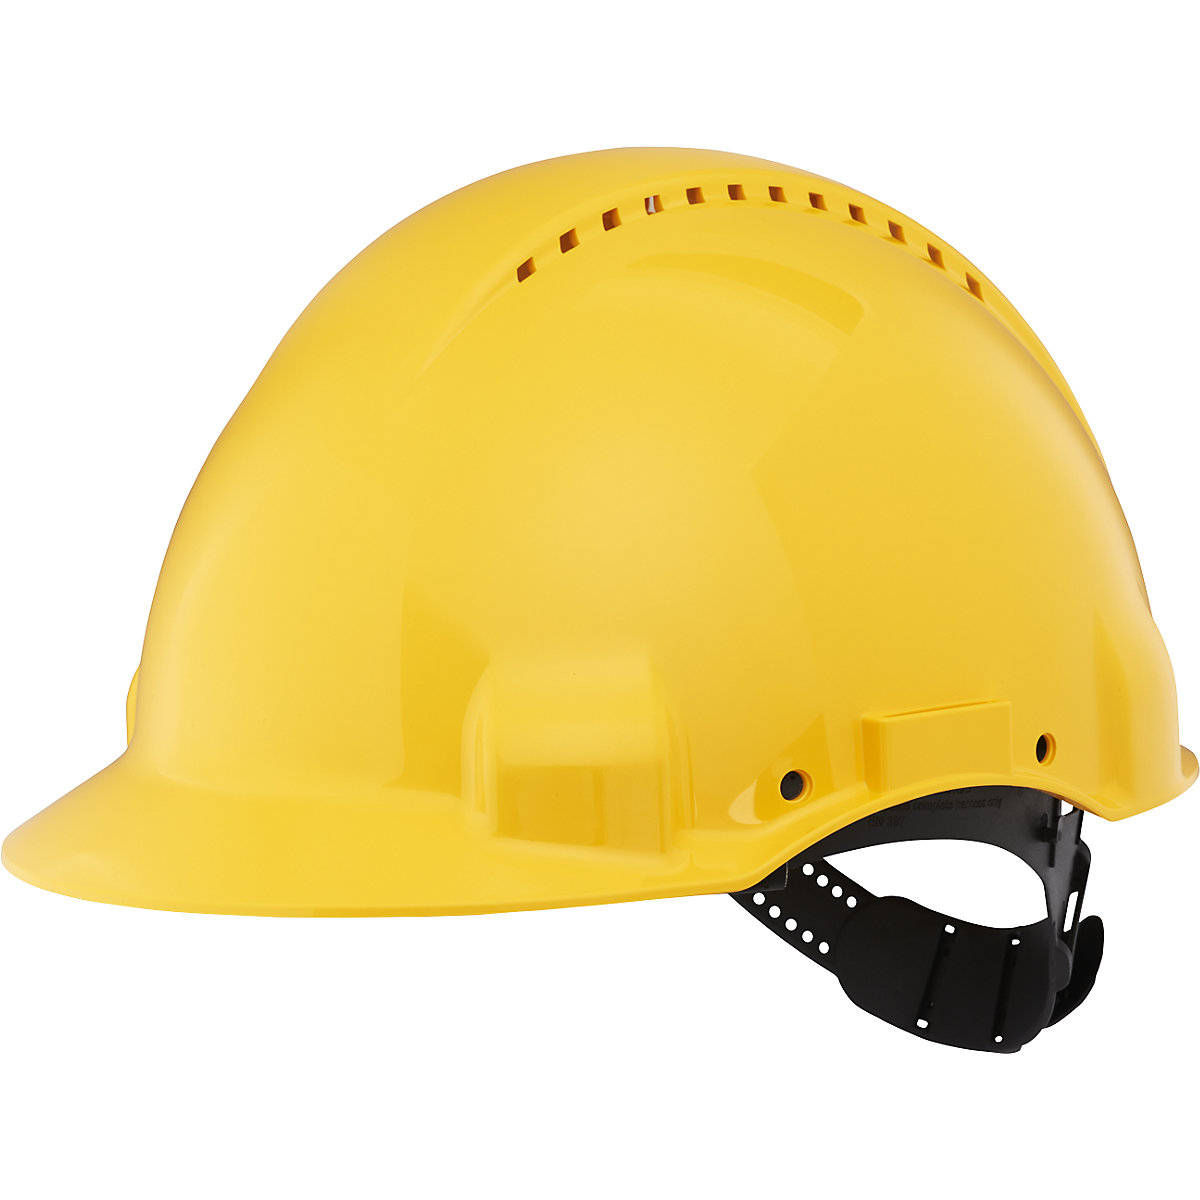 Safety helmet G3000 ventilated - 3M